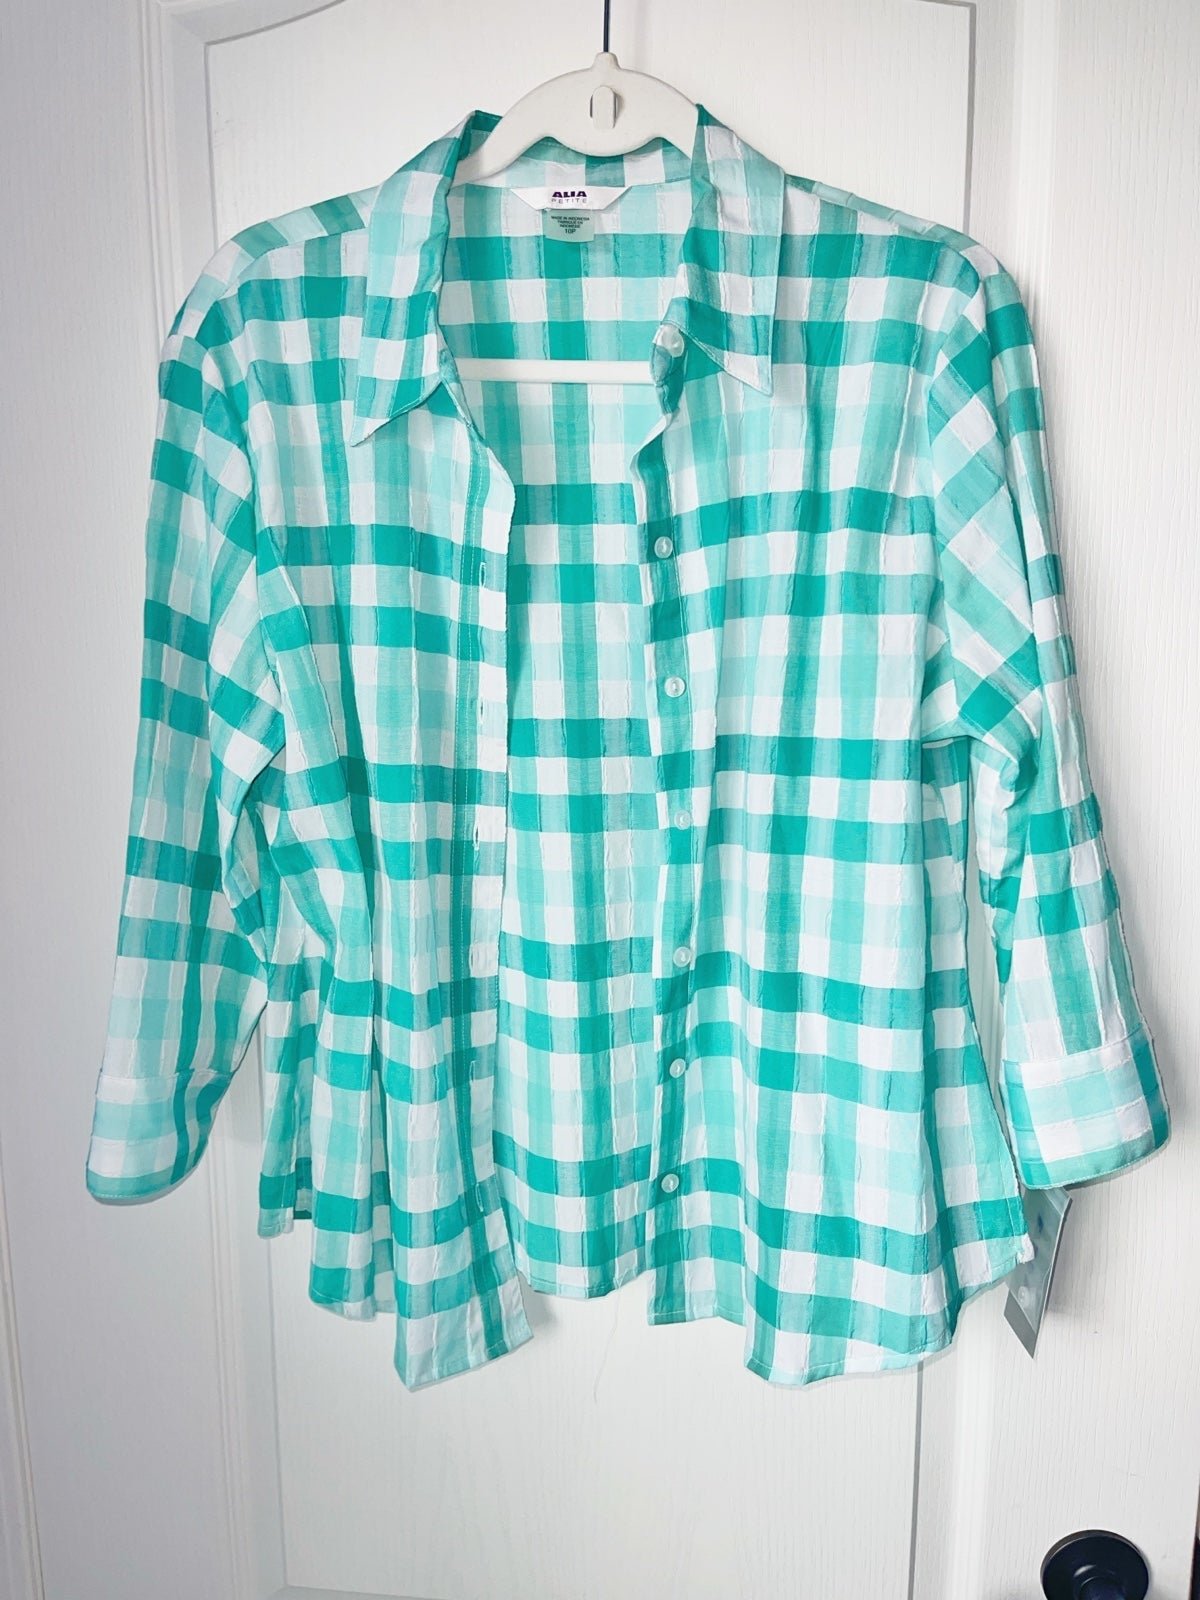 the Lowest price ALIA Plaid Button Down 3/4 Length Sleeve Shirt BNWT KhvqgFXAR Factory Price